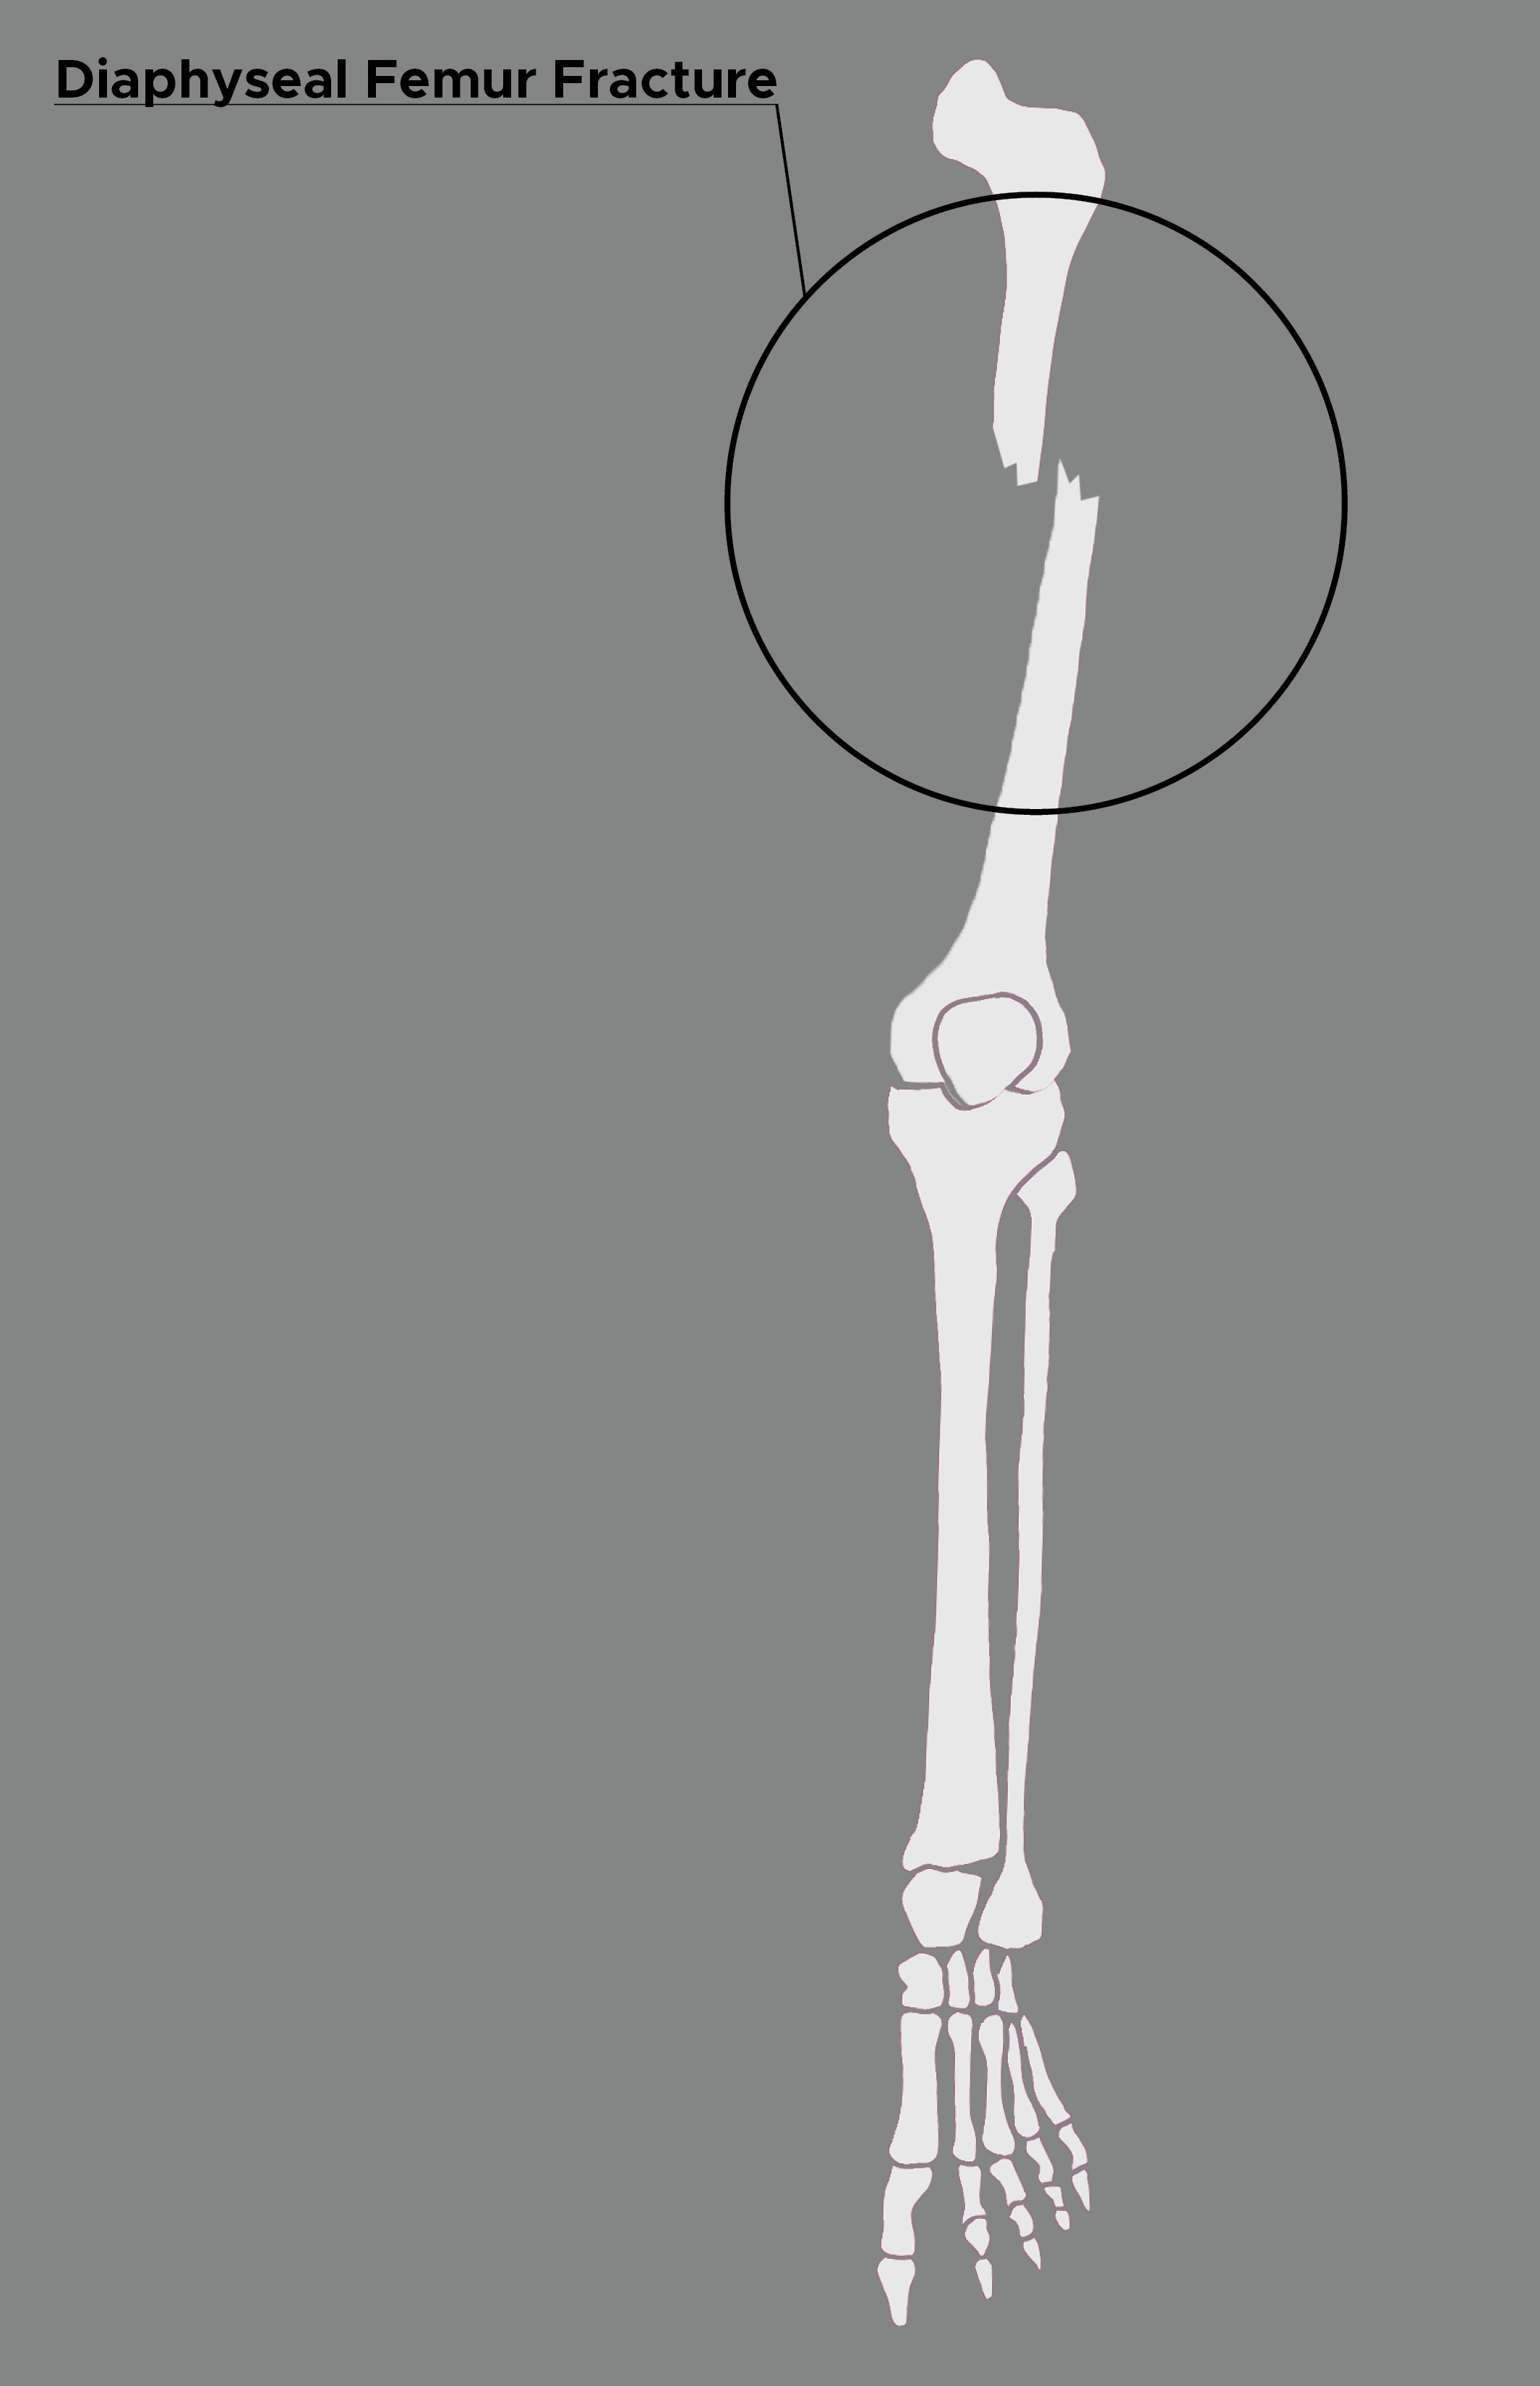 <p>Diaphyseal Femur Fracture. This illustration&nbsp;depicts&nbsp;a femur with a diaphyseal fracture.</p>